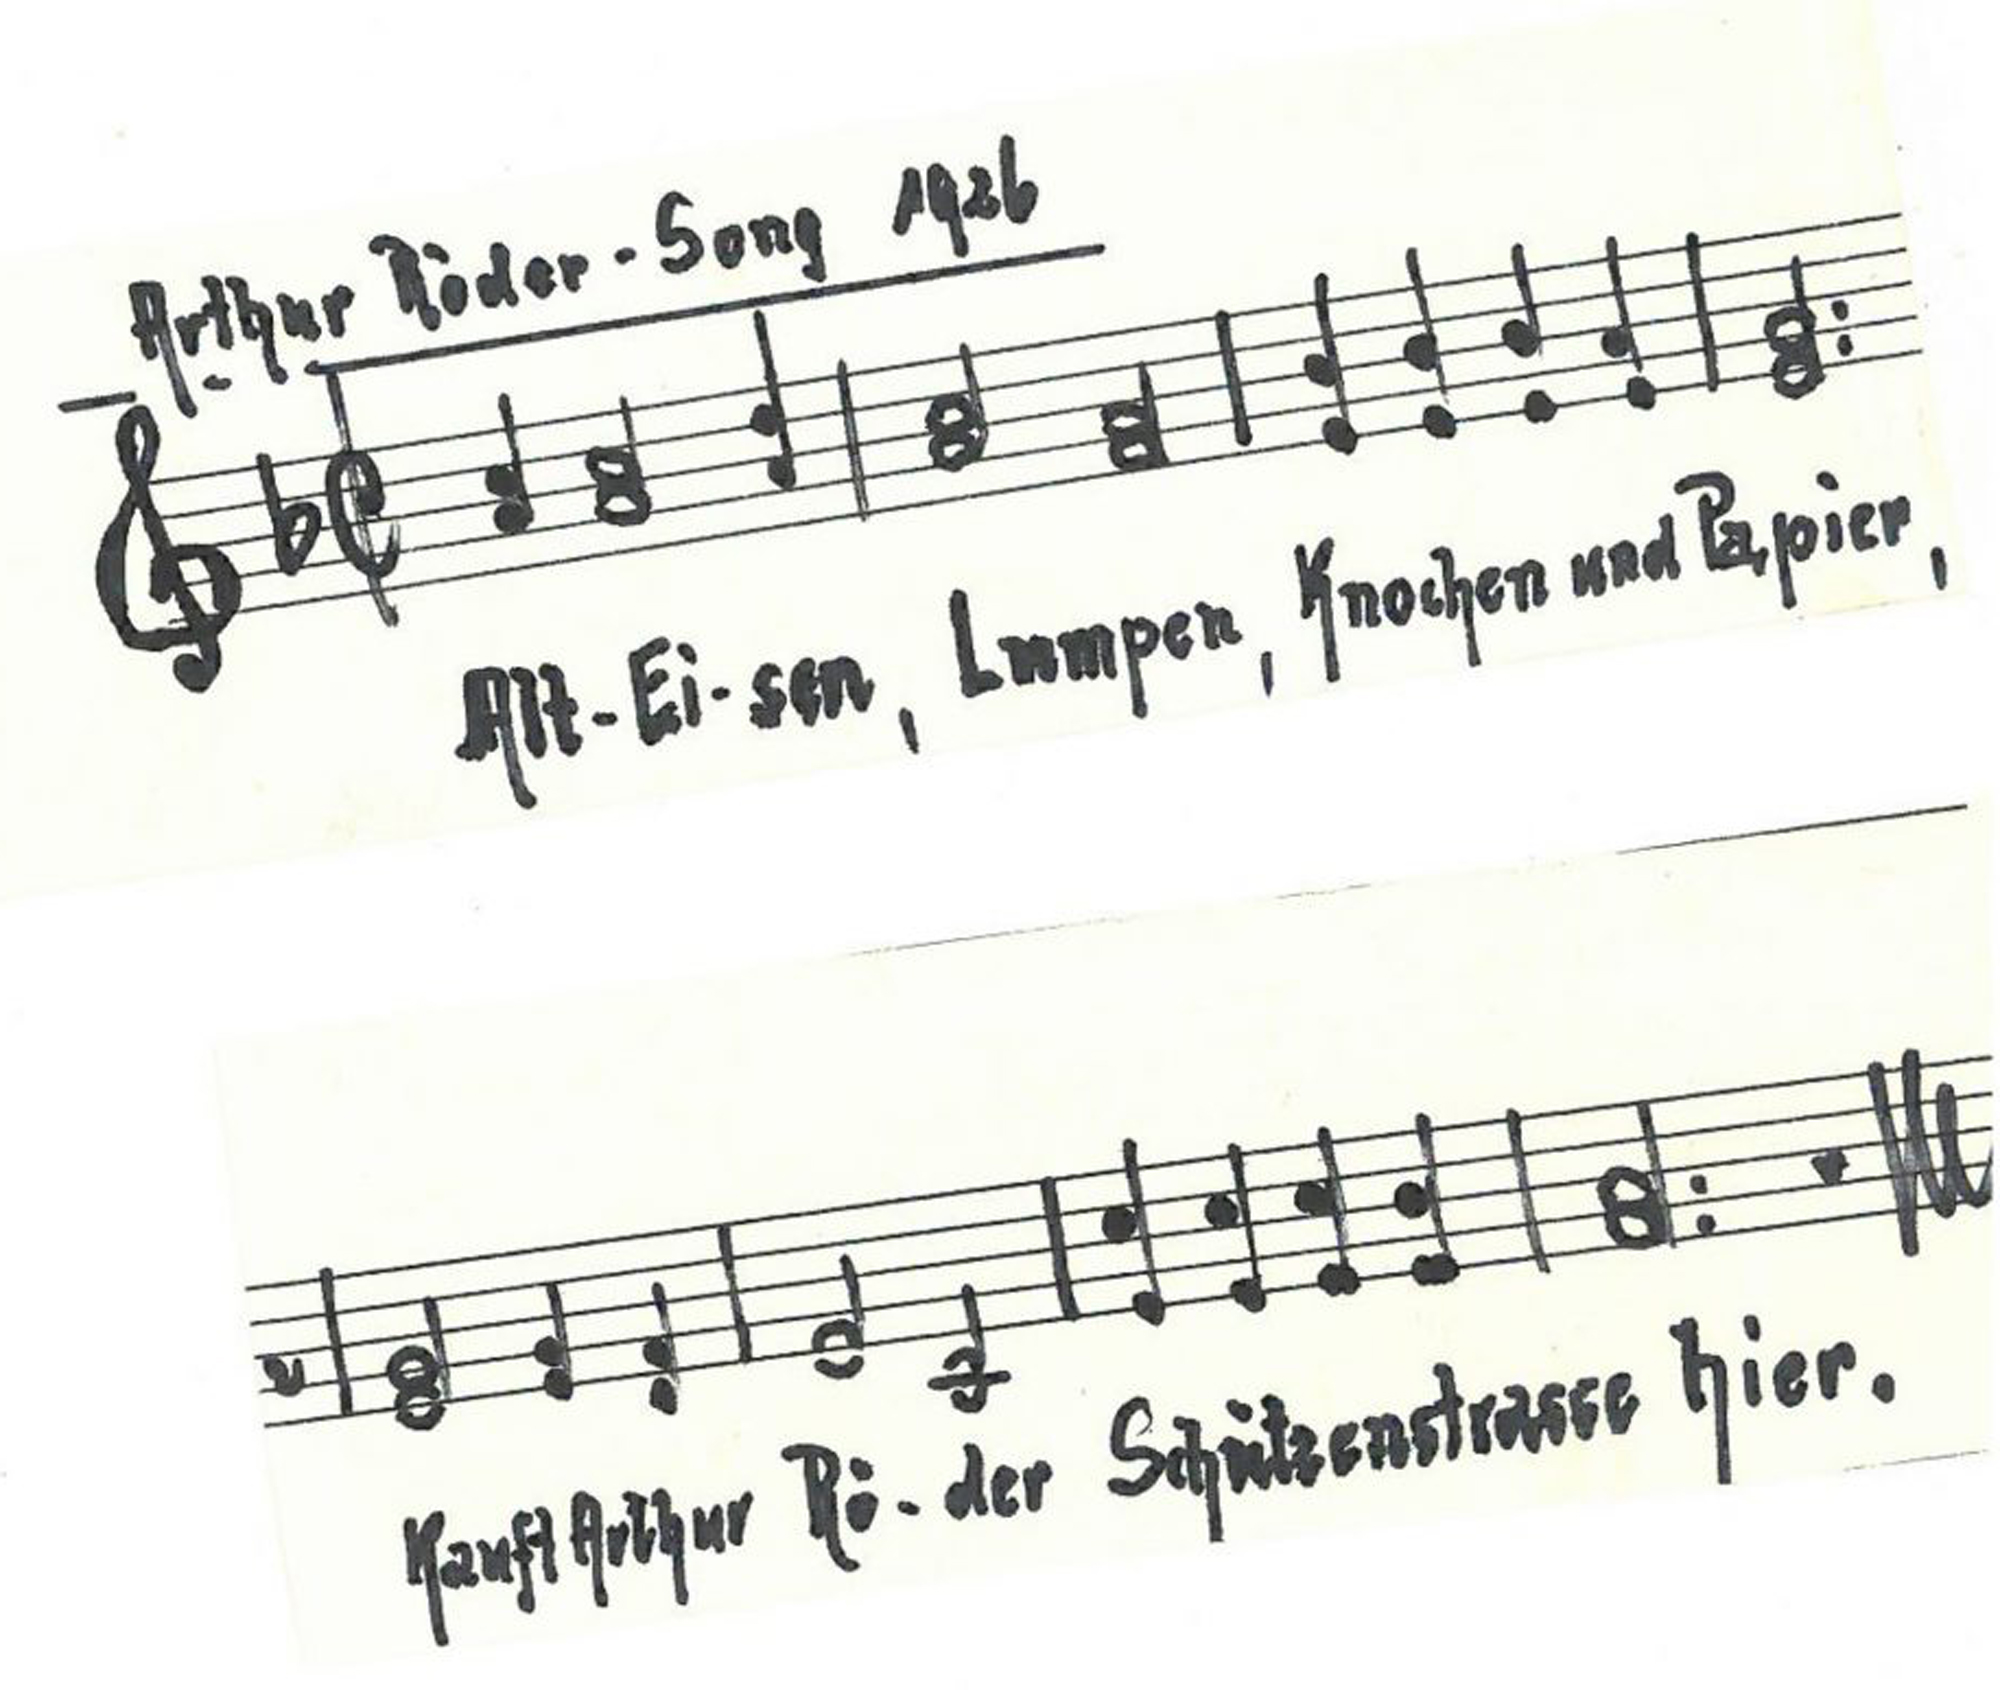 Arthur-Roeder-Song-1926-2000